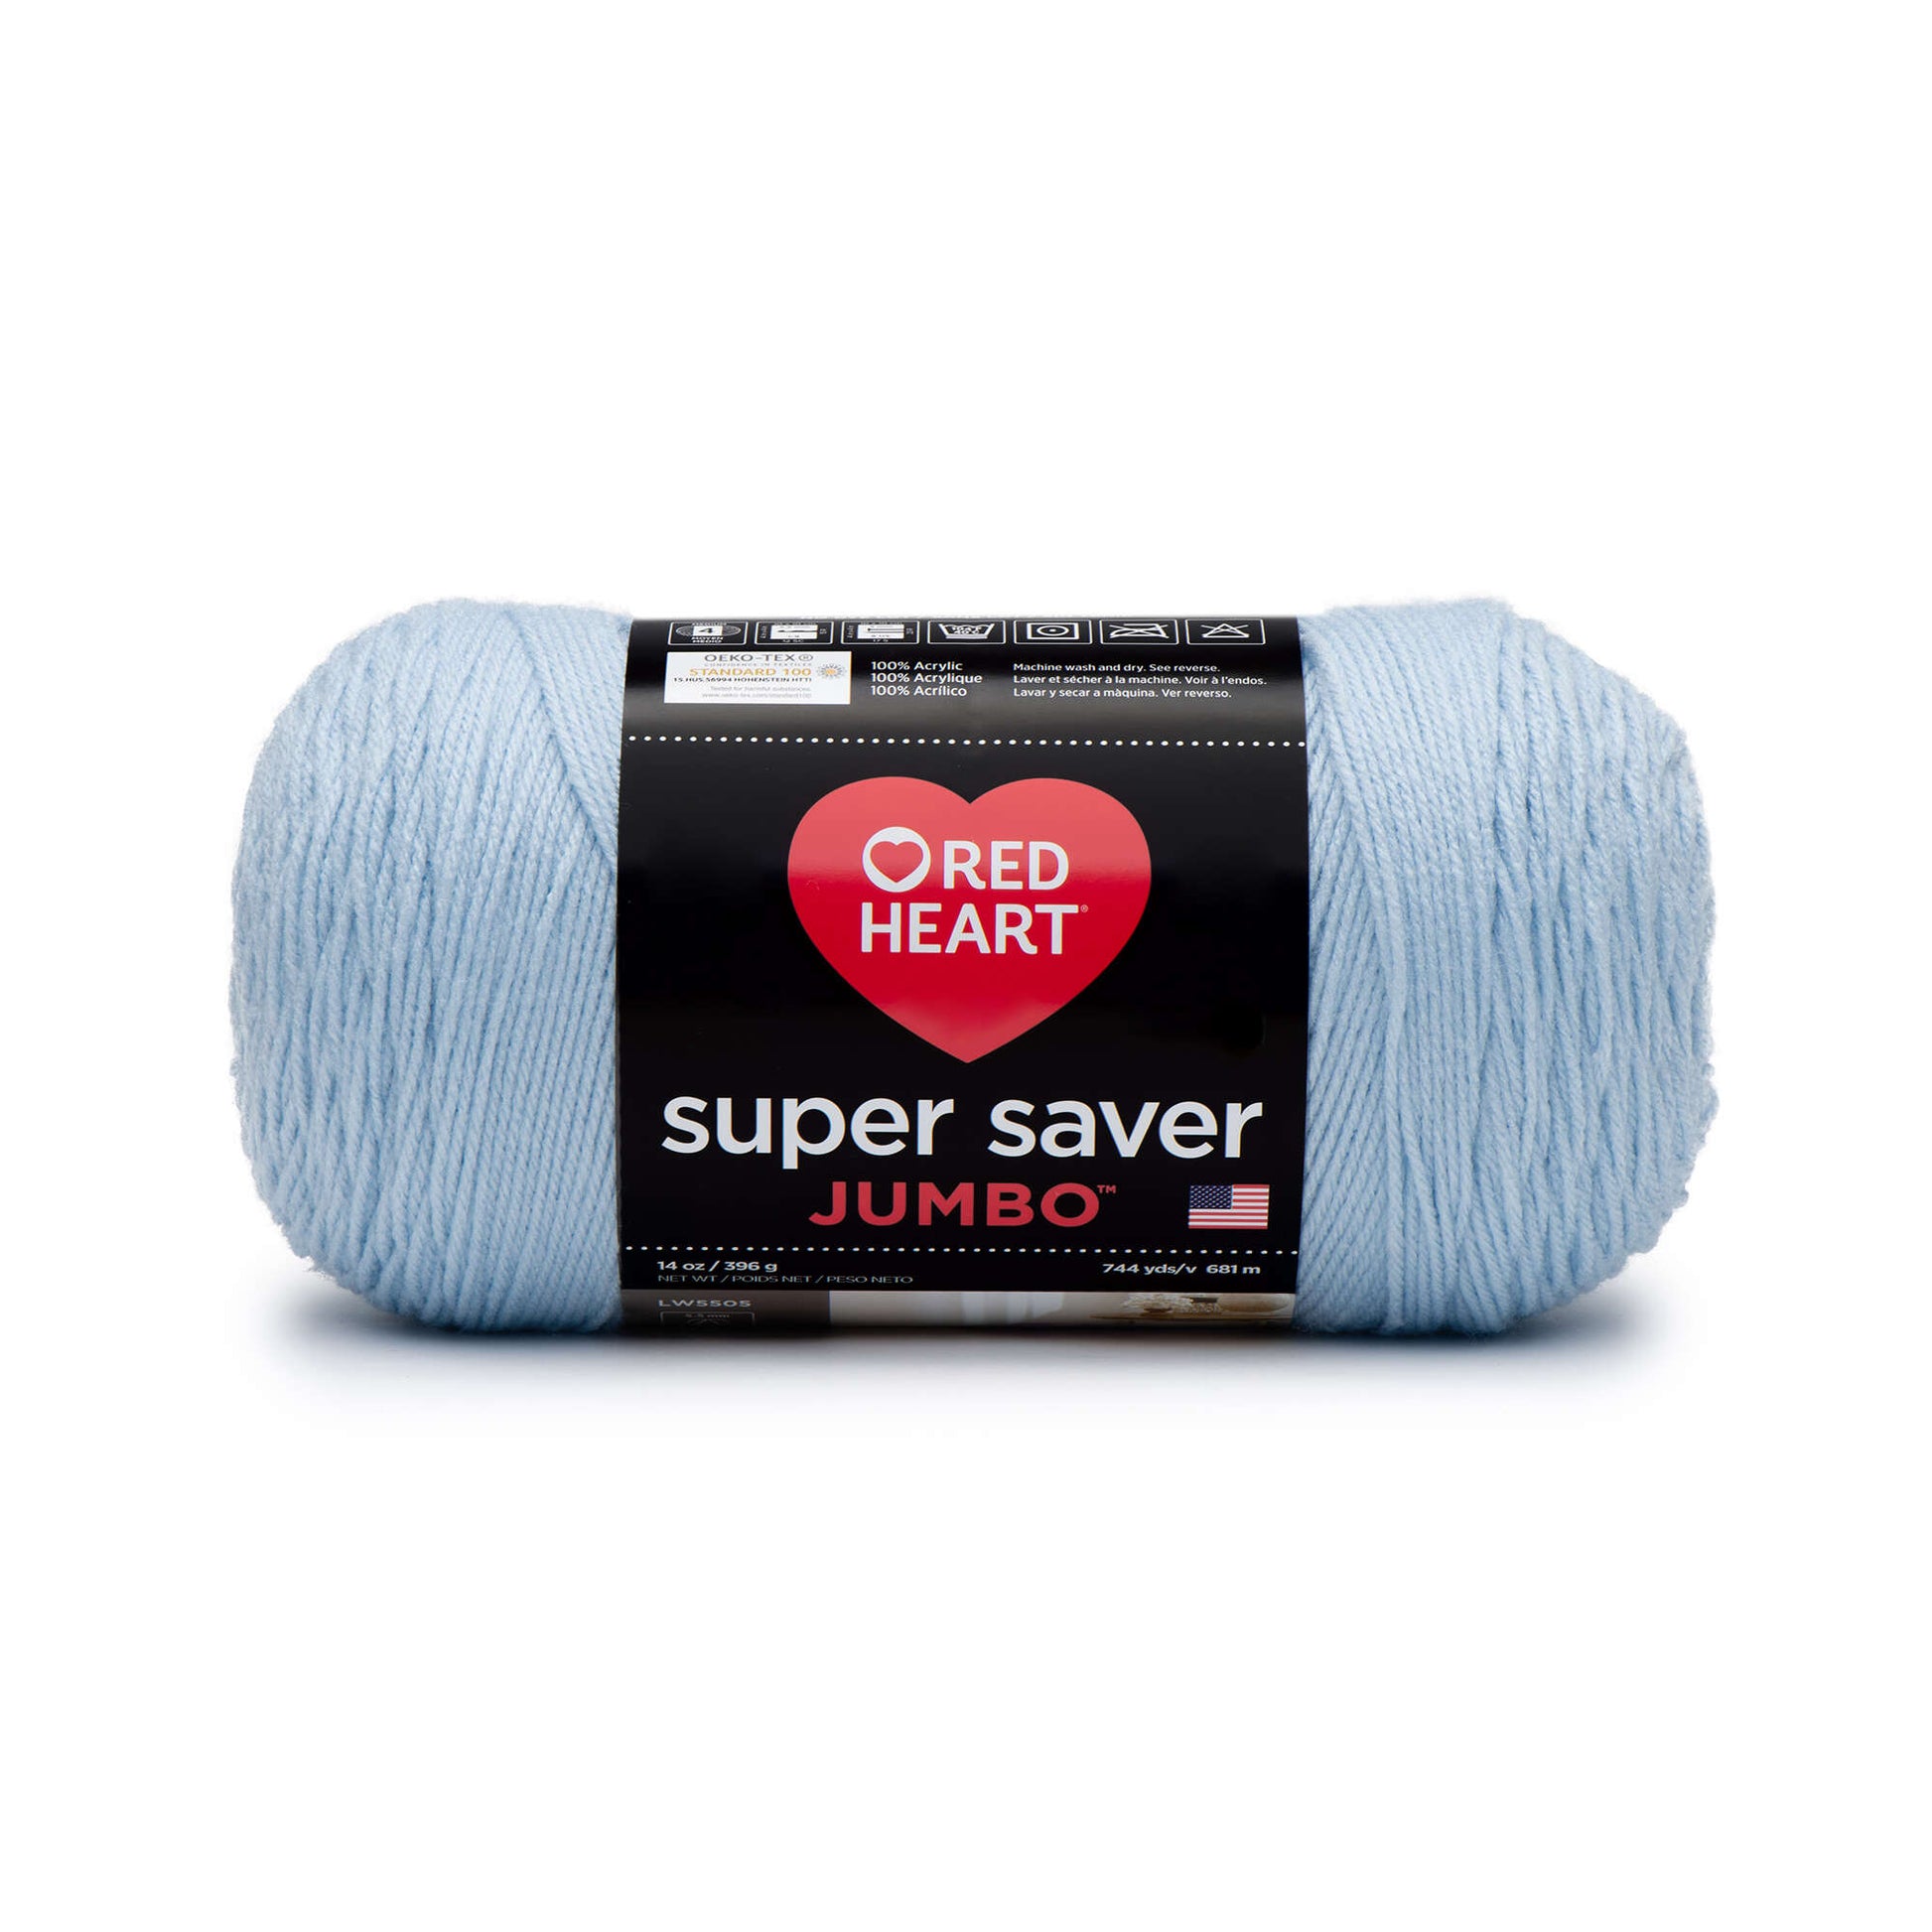 Red Heart Super Saver Jumbo Yarn - Clearance Shades